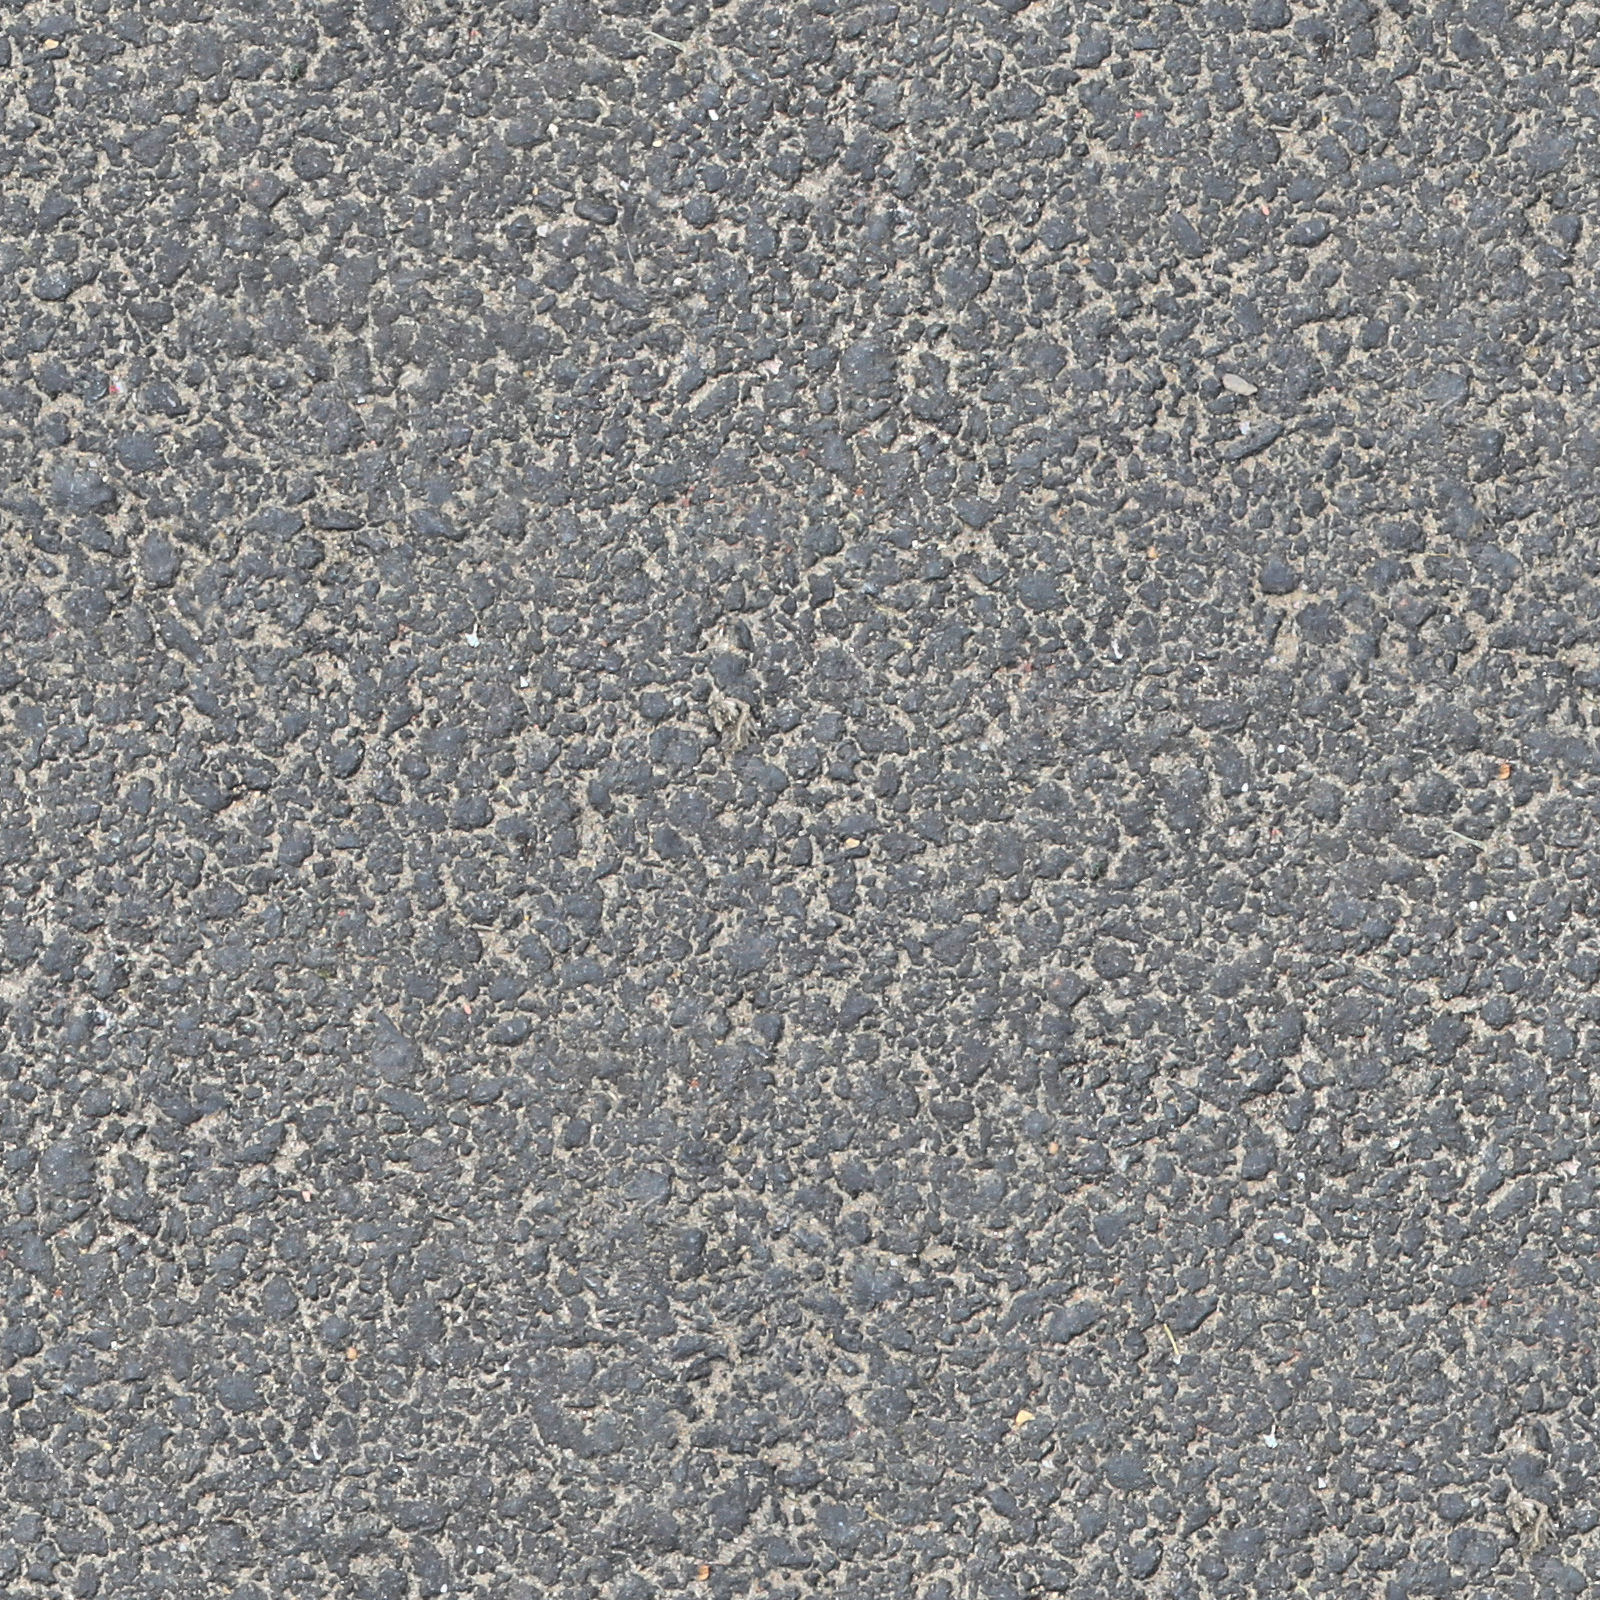 Grey asphalt road photo